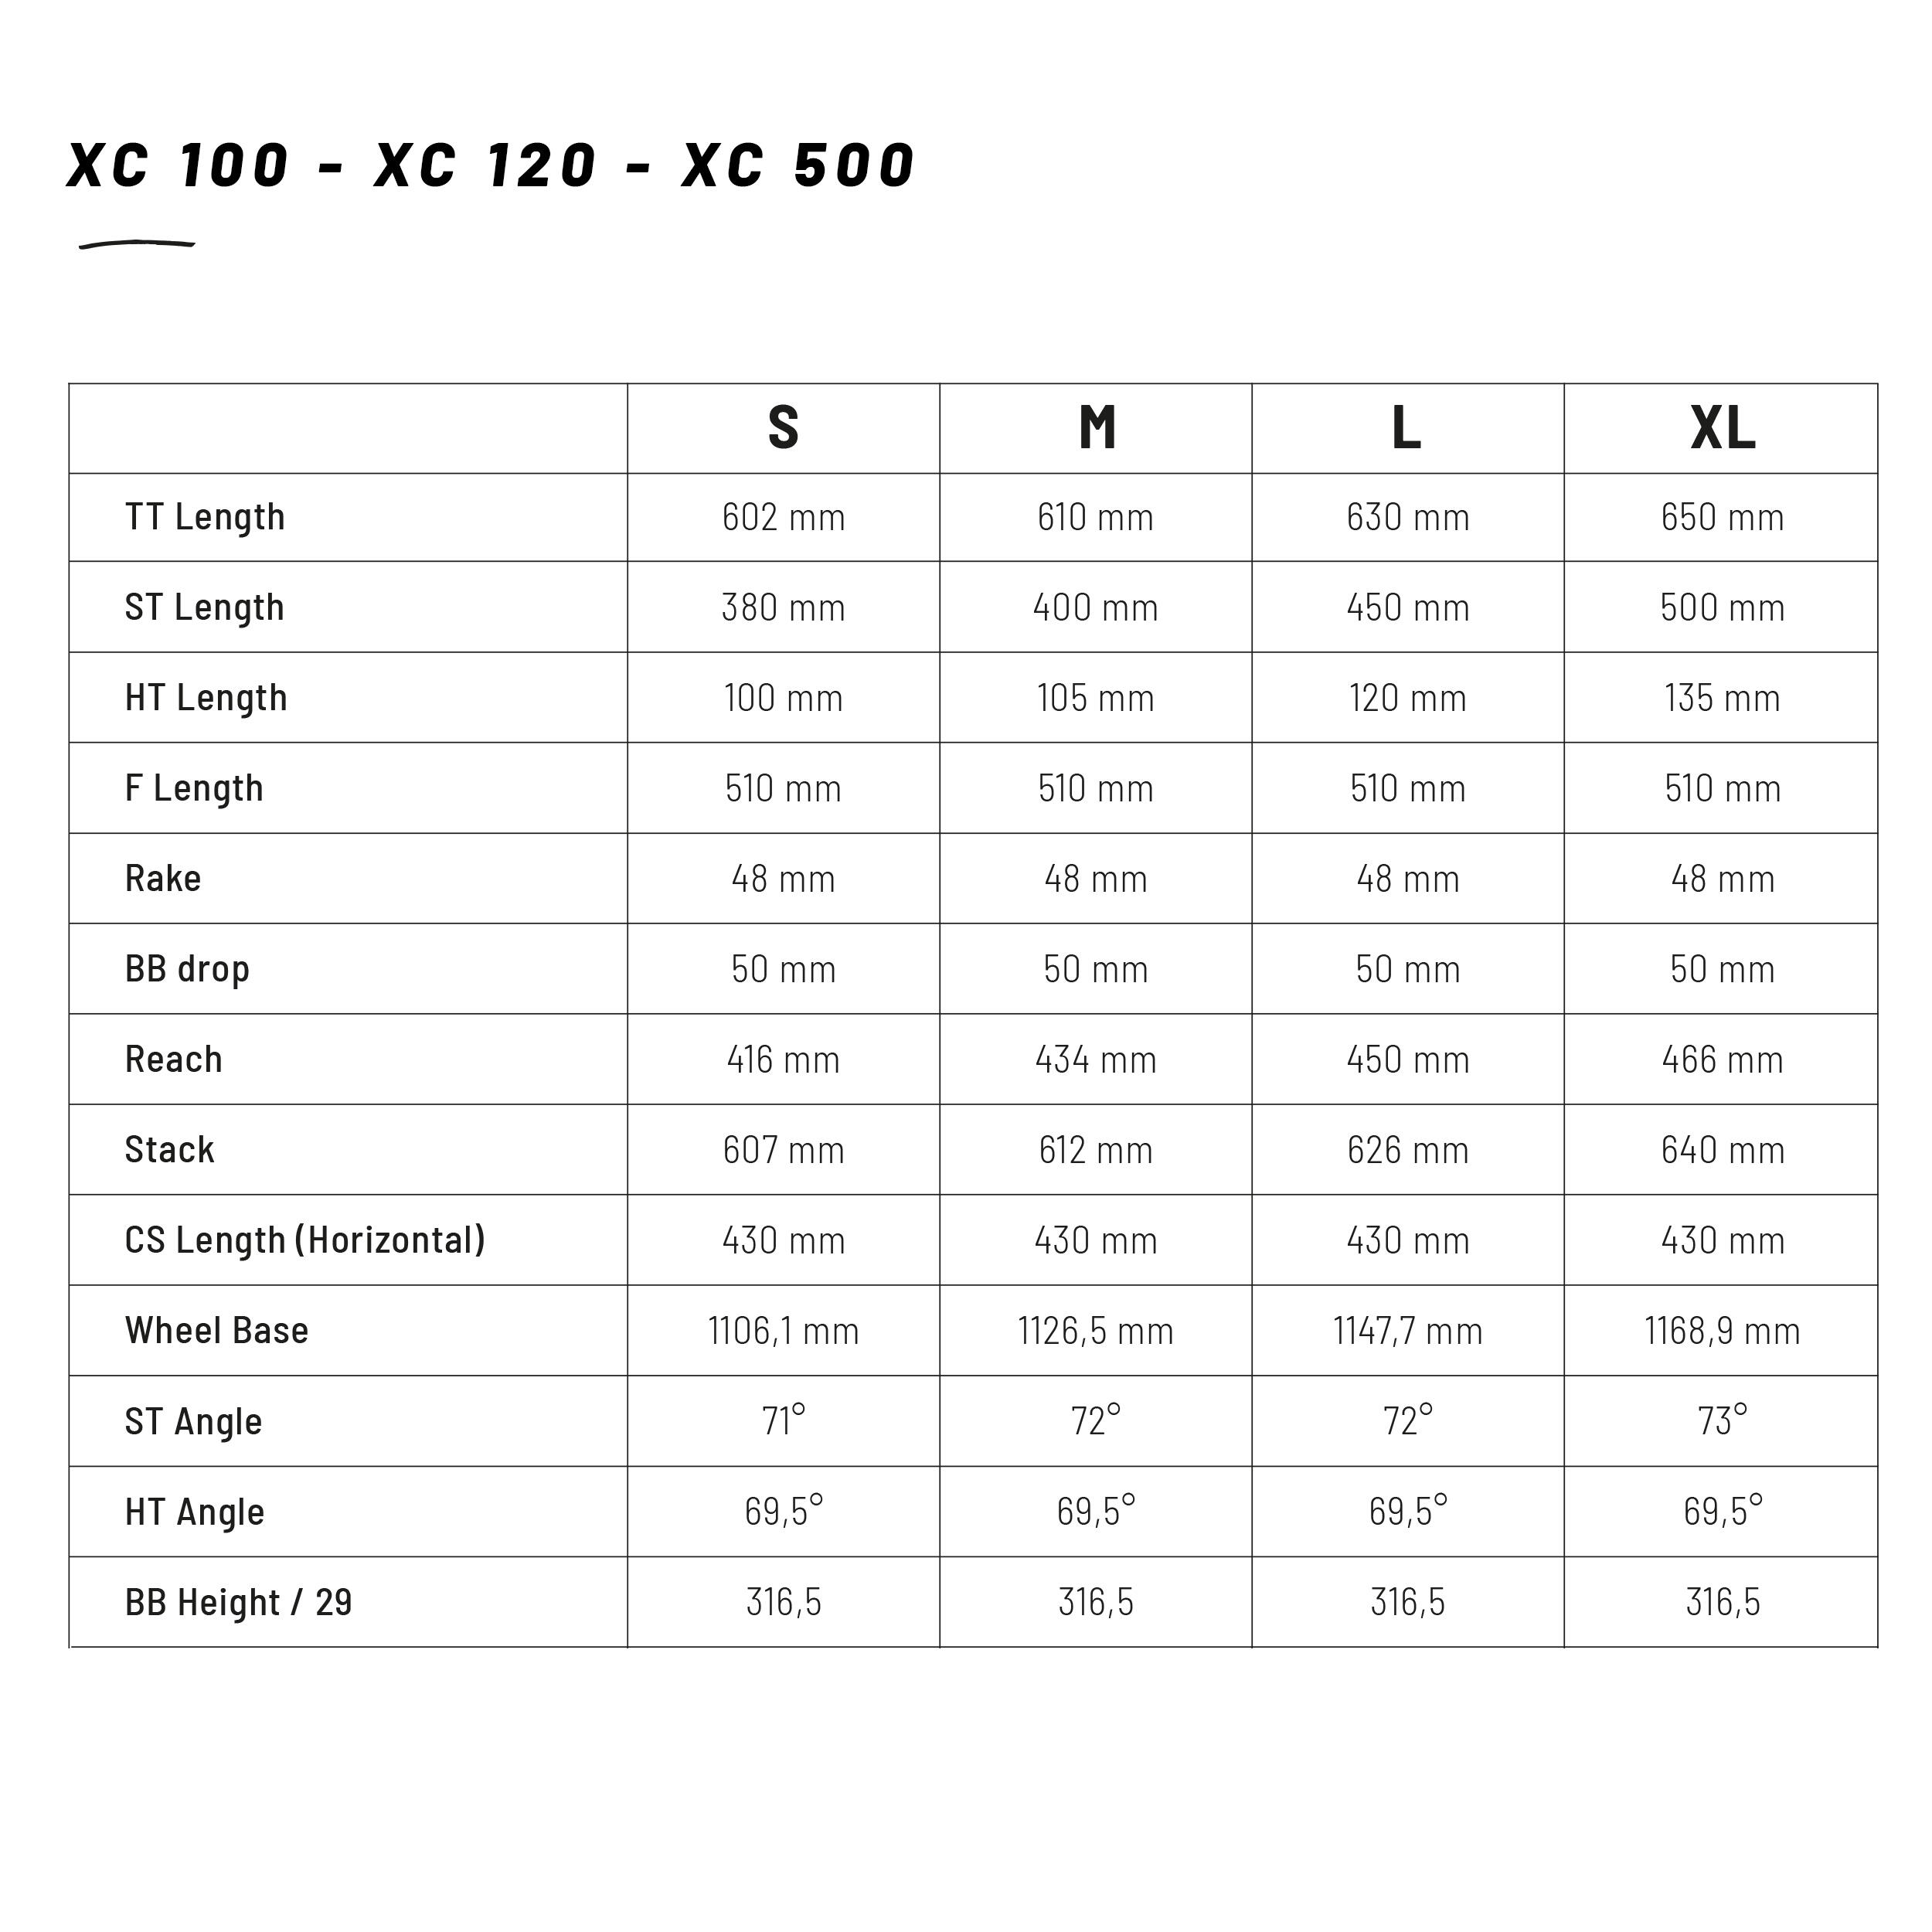 29 Inch MOUNTAIN BIKE ROCKRIDER XC 500 SRAM NX/GX - SKY/BLUE 12/14